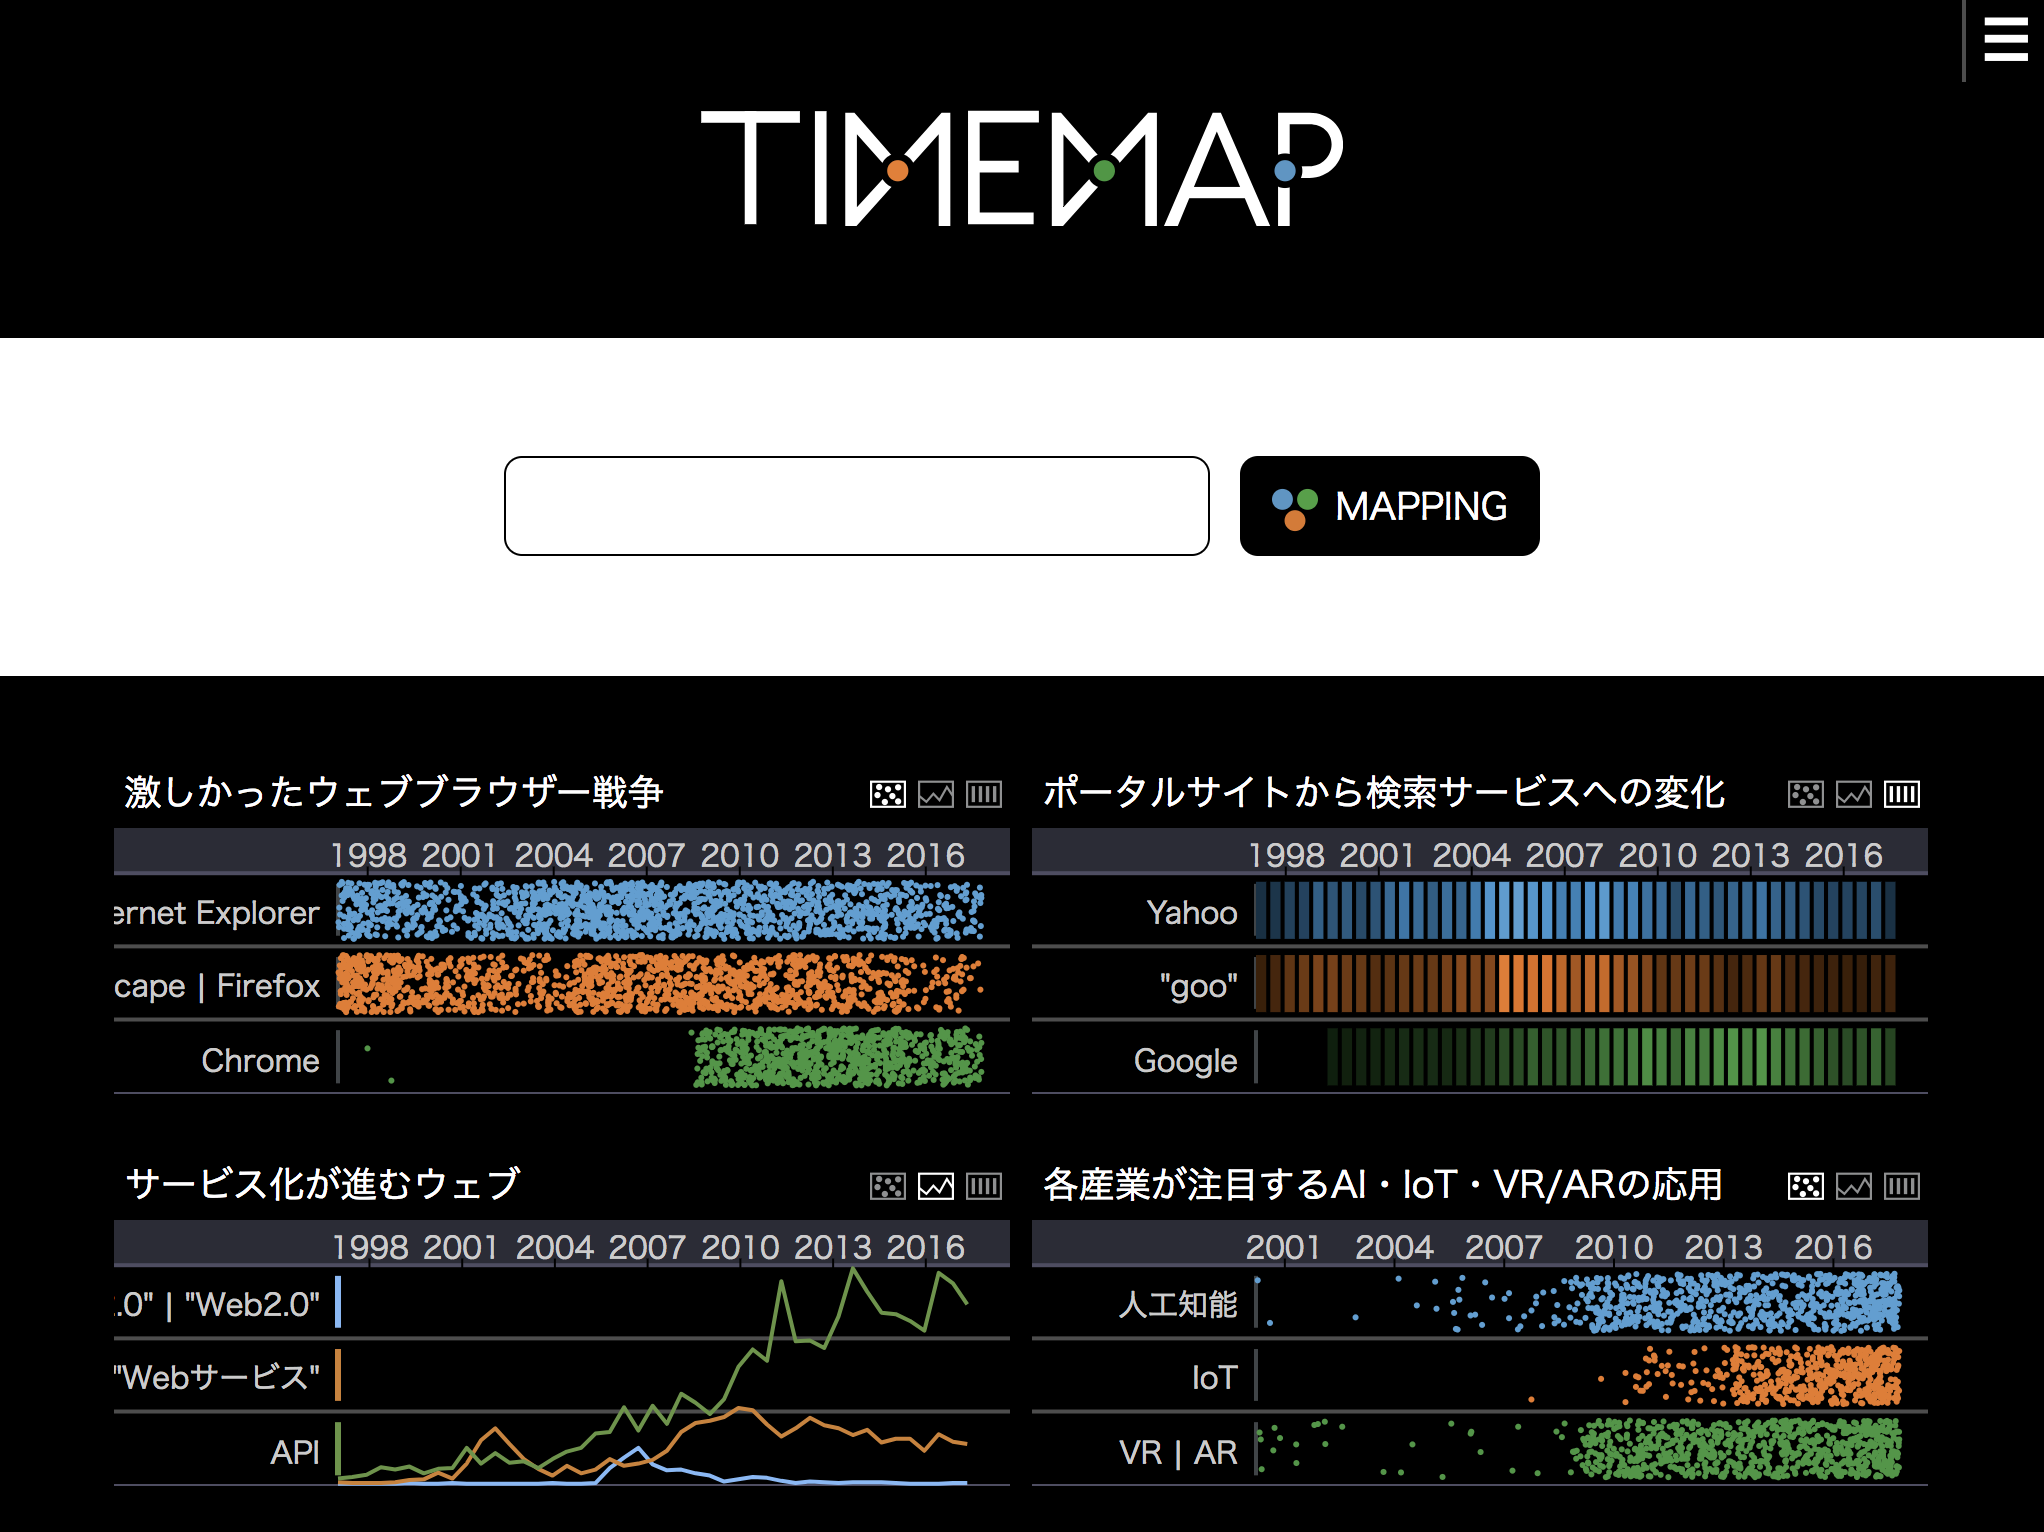 TIMEMAP